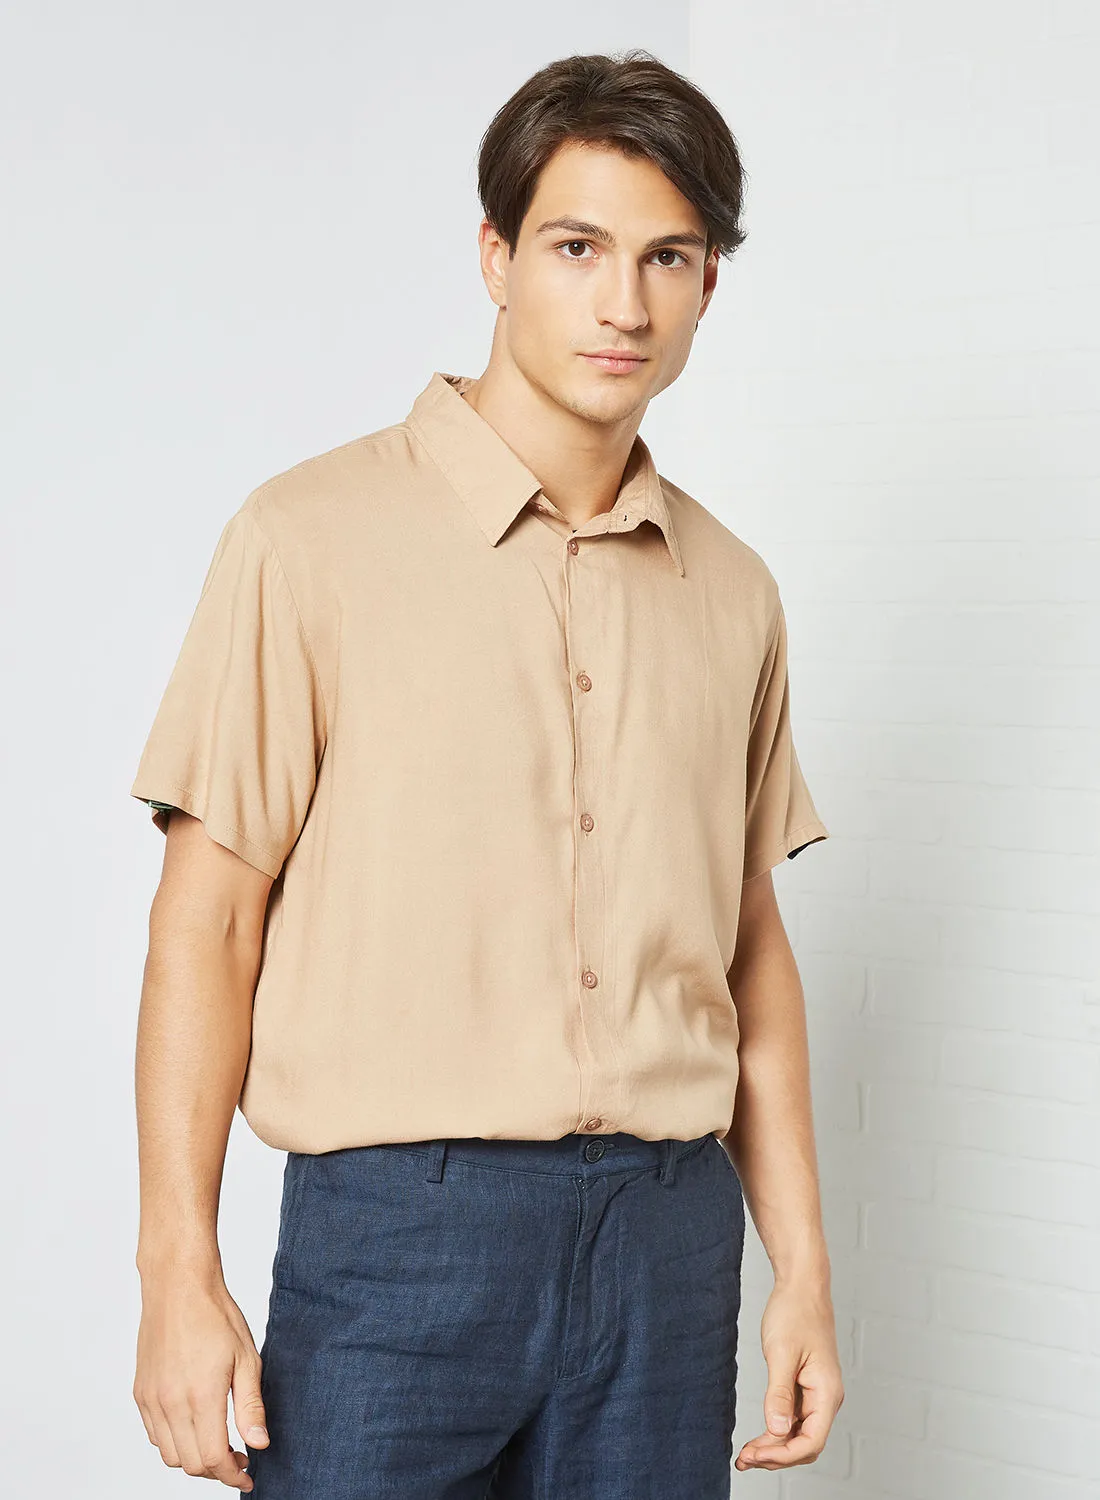 STATE 8 Plain Dyed Shirt Brown